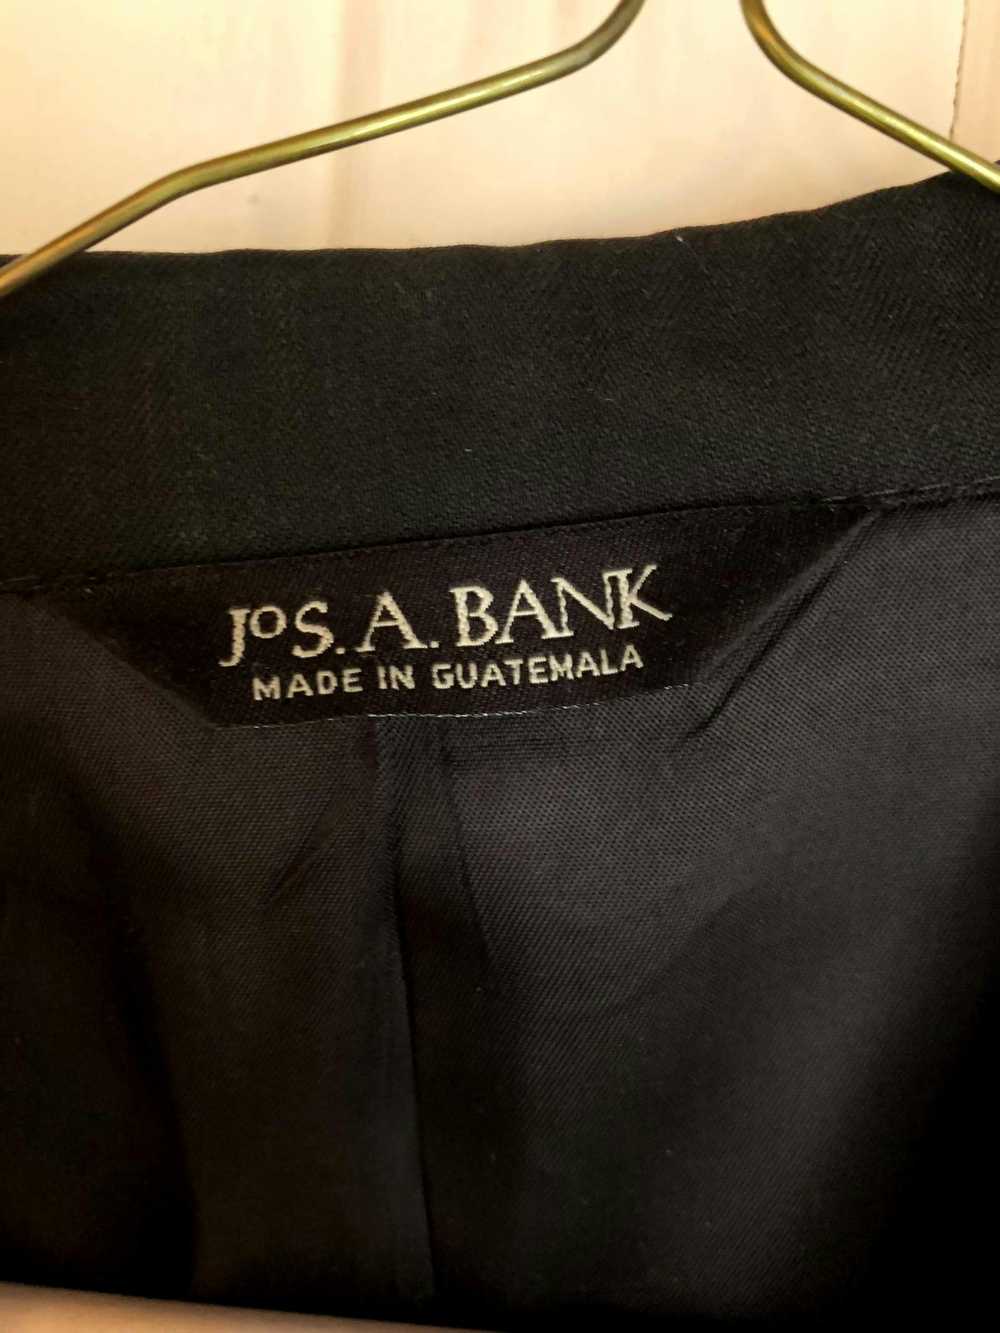 Jos. A. Bank Suit Jacket - image 4